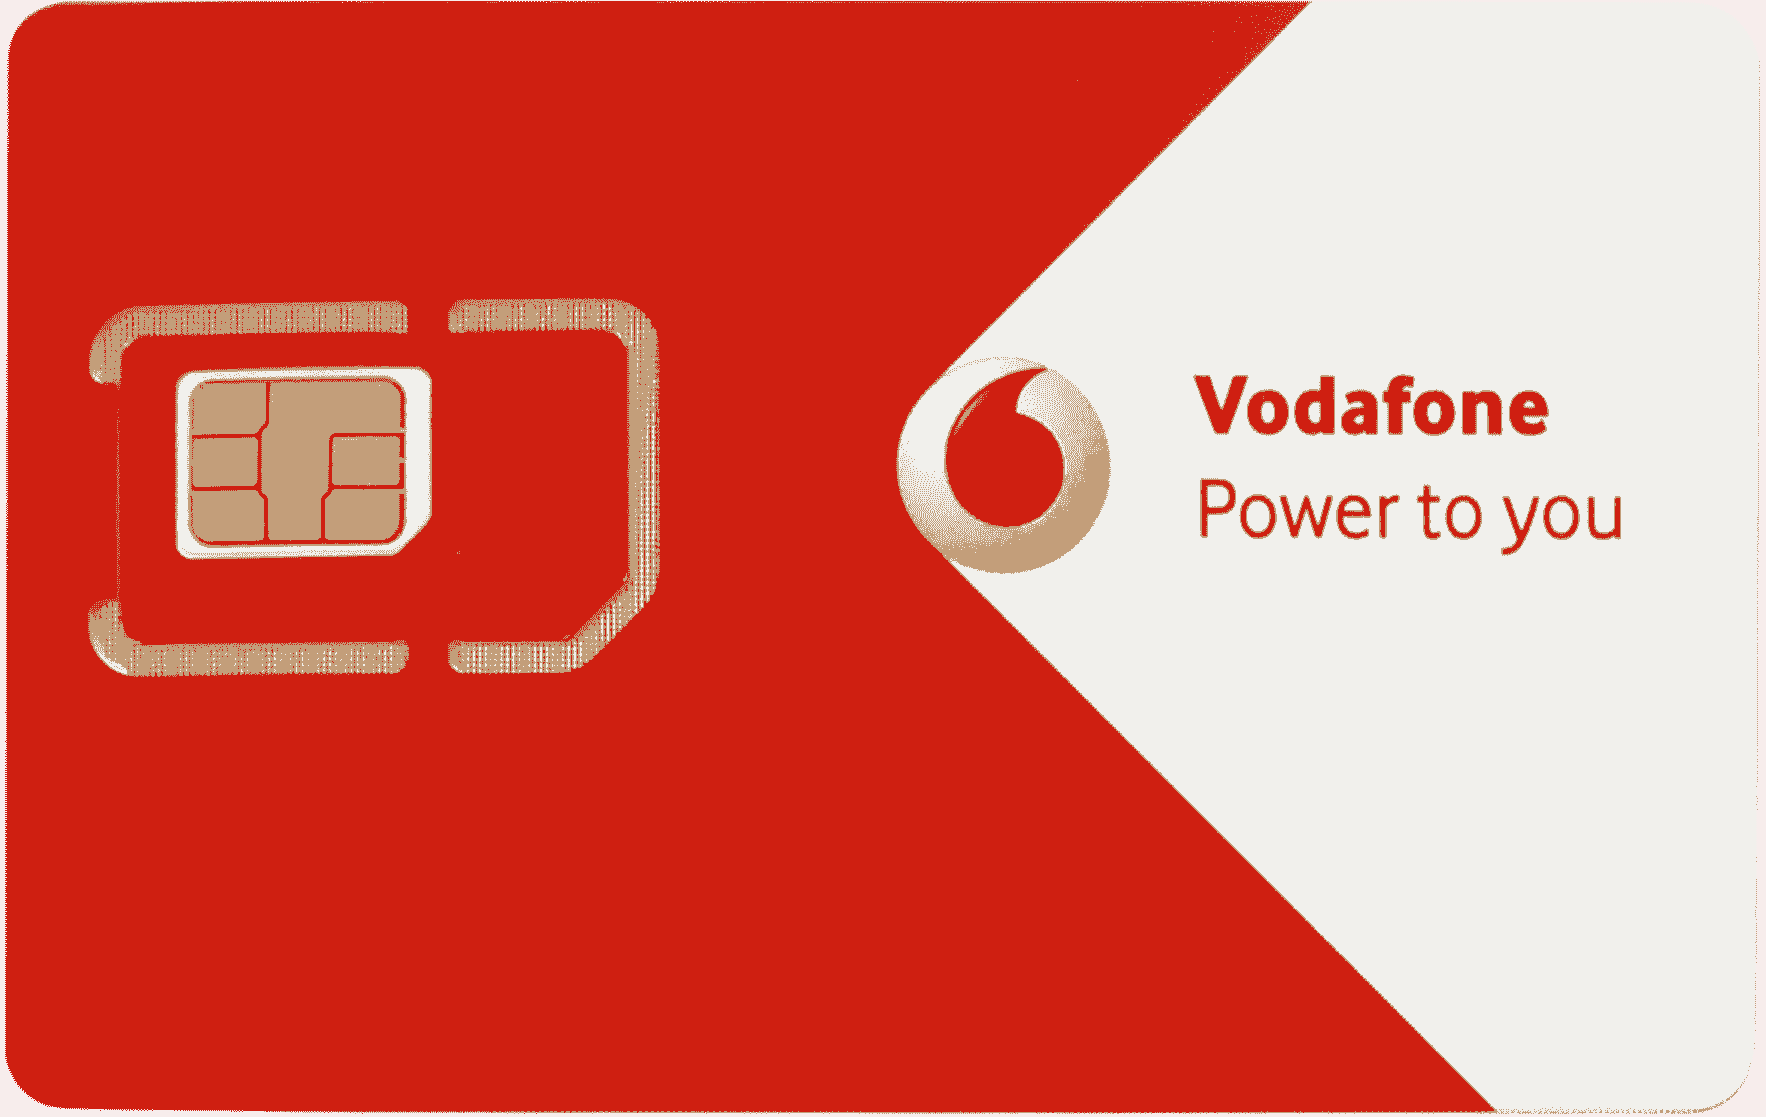 Spain Vodafone SIM card 25GB data/ EU Turkey 9GB w 300 talking minutes (Passport required for activation)